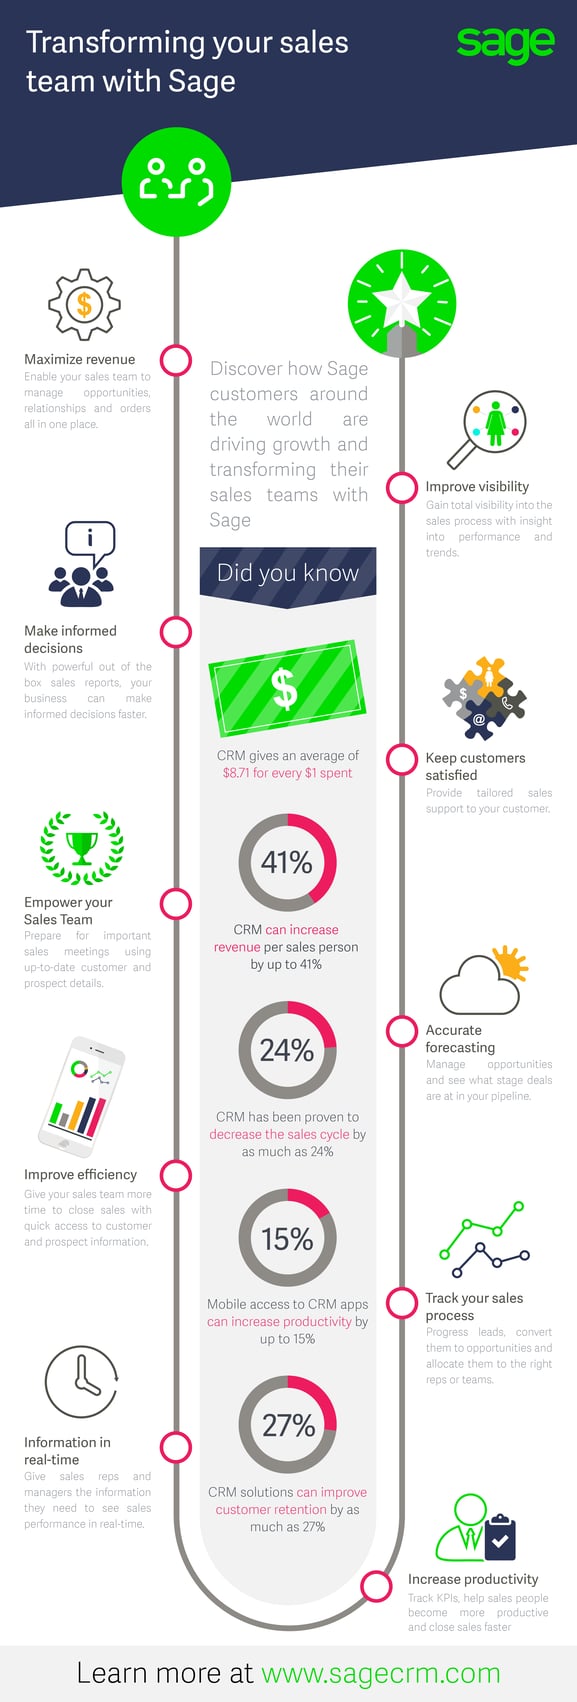 Sage_CRM_sales_team_infographic.png